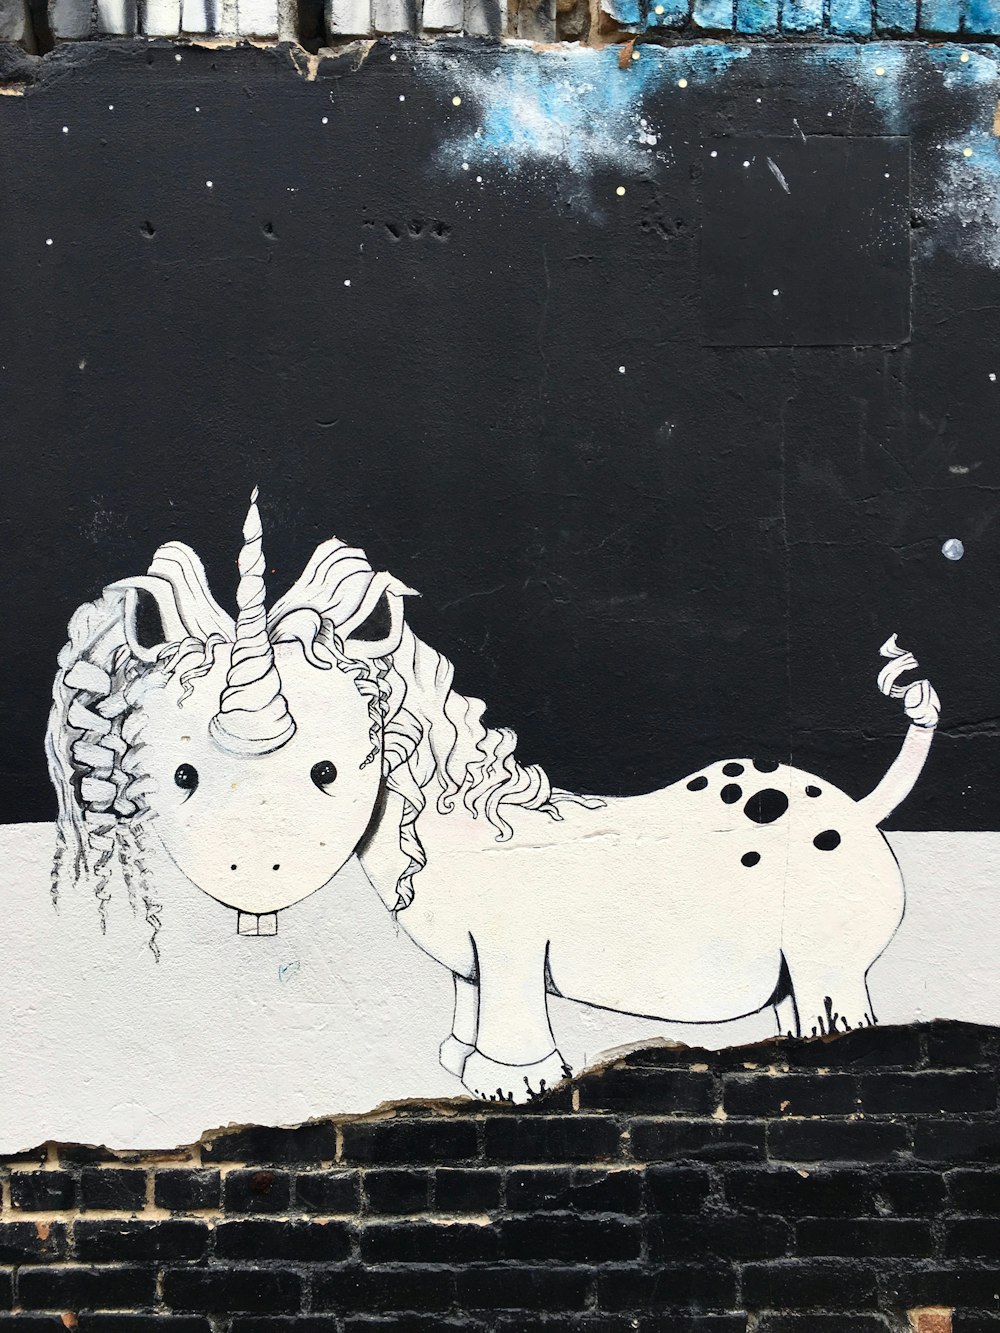 Mural de unicornio blanco y negro